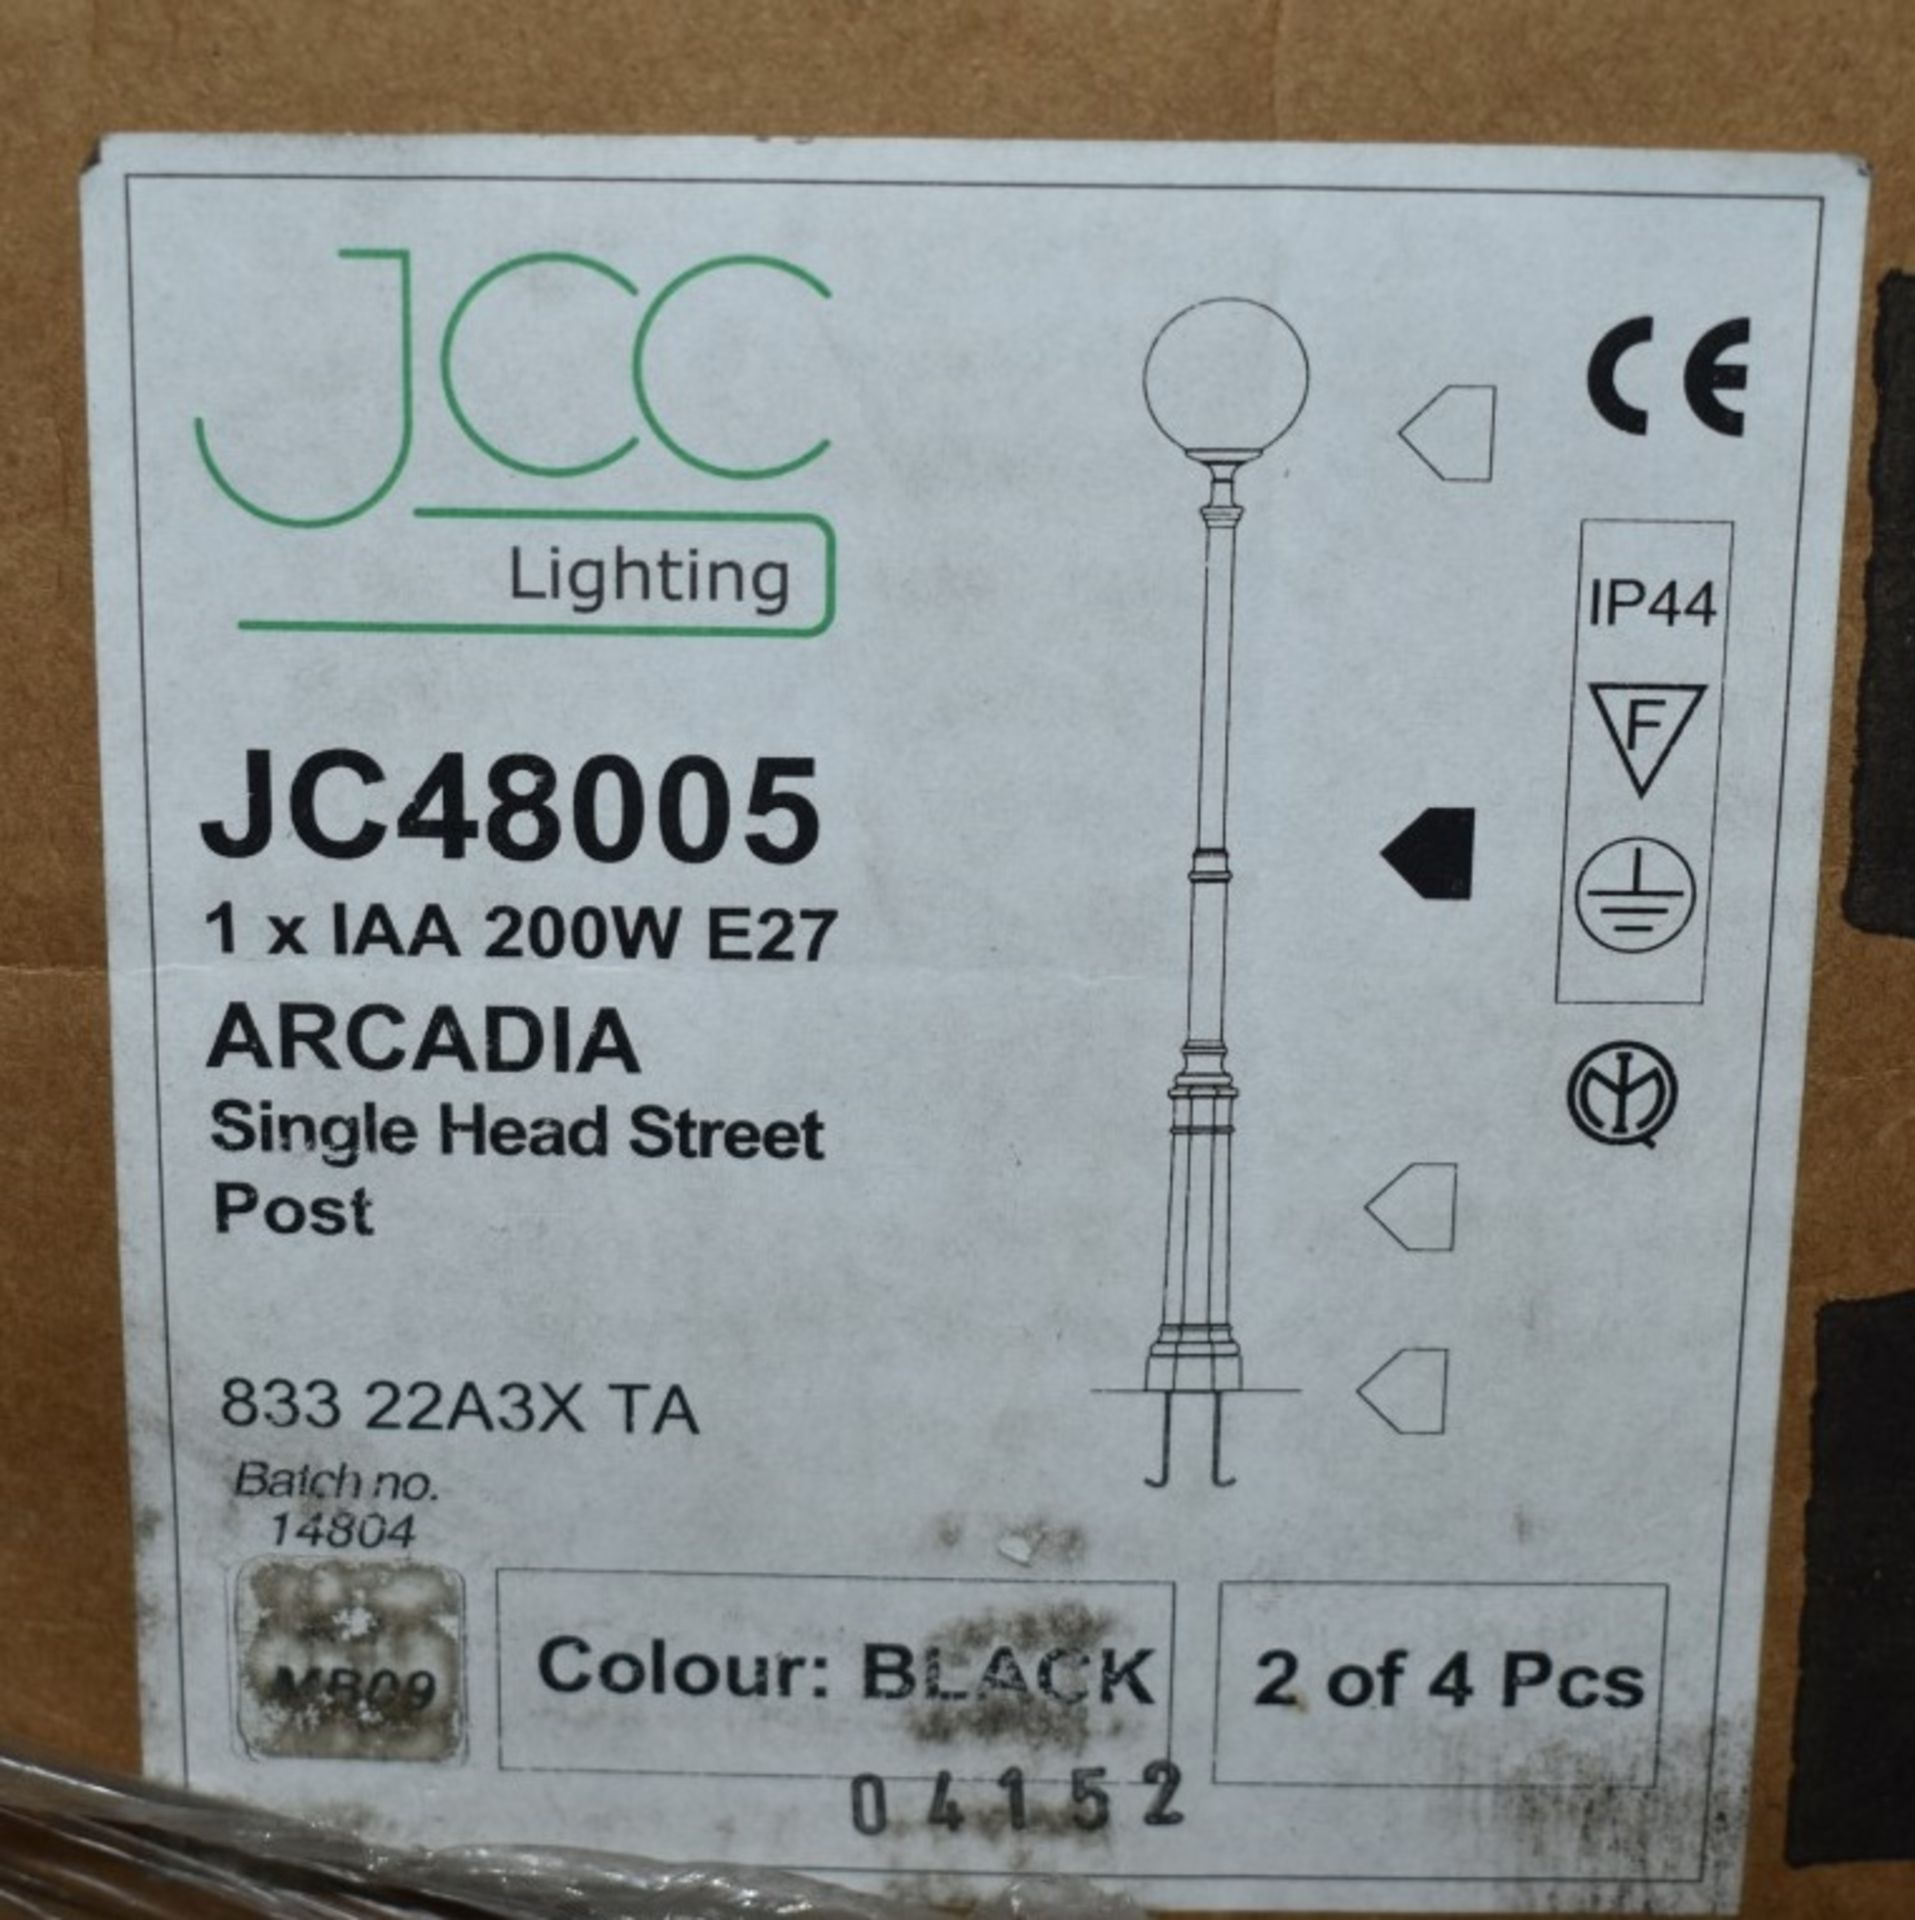 1 x JCC Lighting ARCADIA Single Head STREET LIGHT POST 0 200w E27 - IP44 Rated - Traditional Full Si - Image 13 of 15